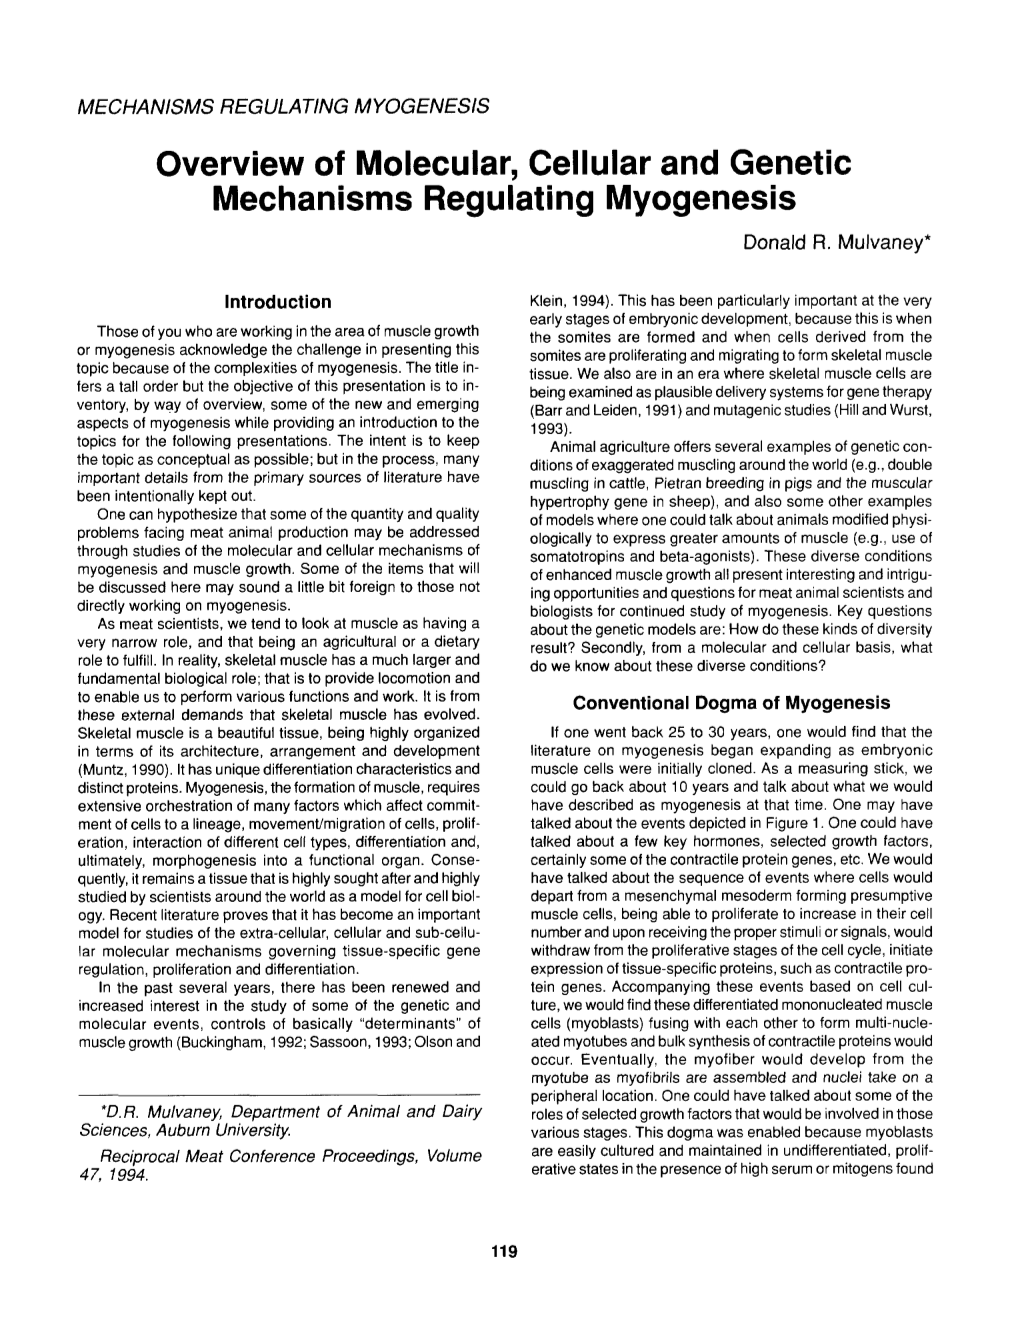 Overview of Molecular, Cellular and Genetic Mechanisms Regulating Myogenesis Donald R